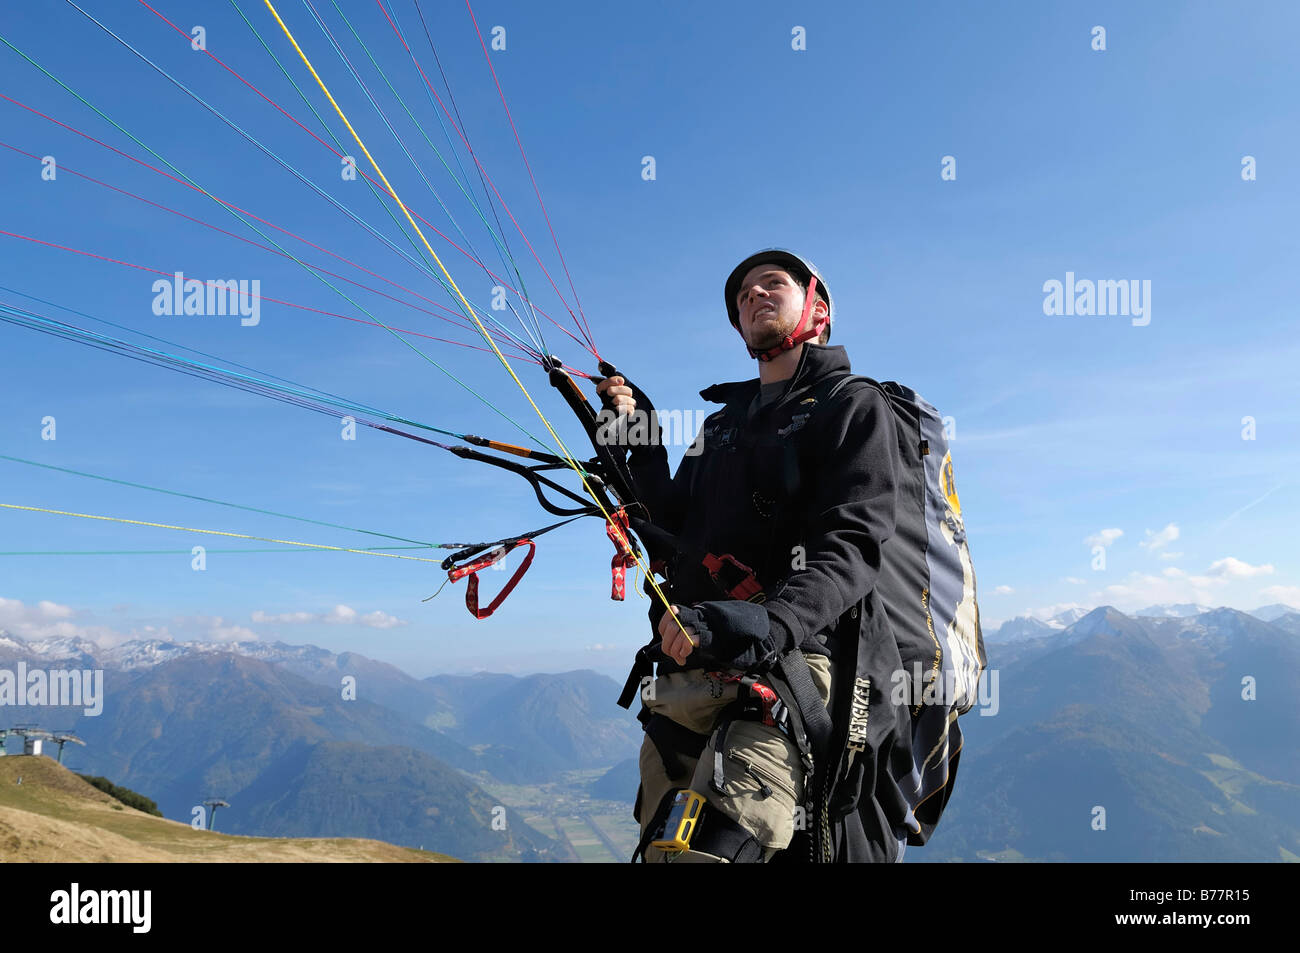 Paraglider preparing for takeoff, Monte Cavallo, Sterzing, Province of Bolzano-Bozen, Italy, Europe Stock Photo